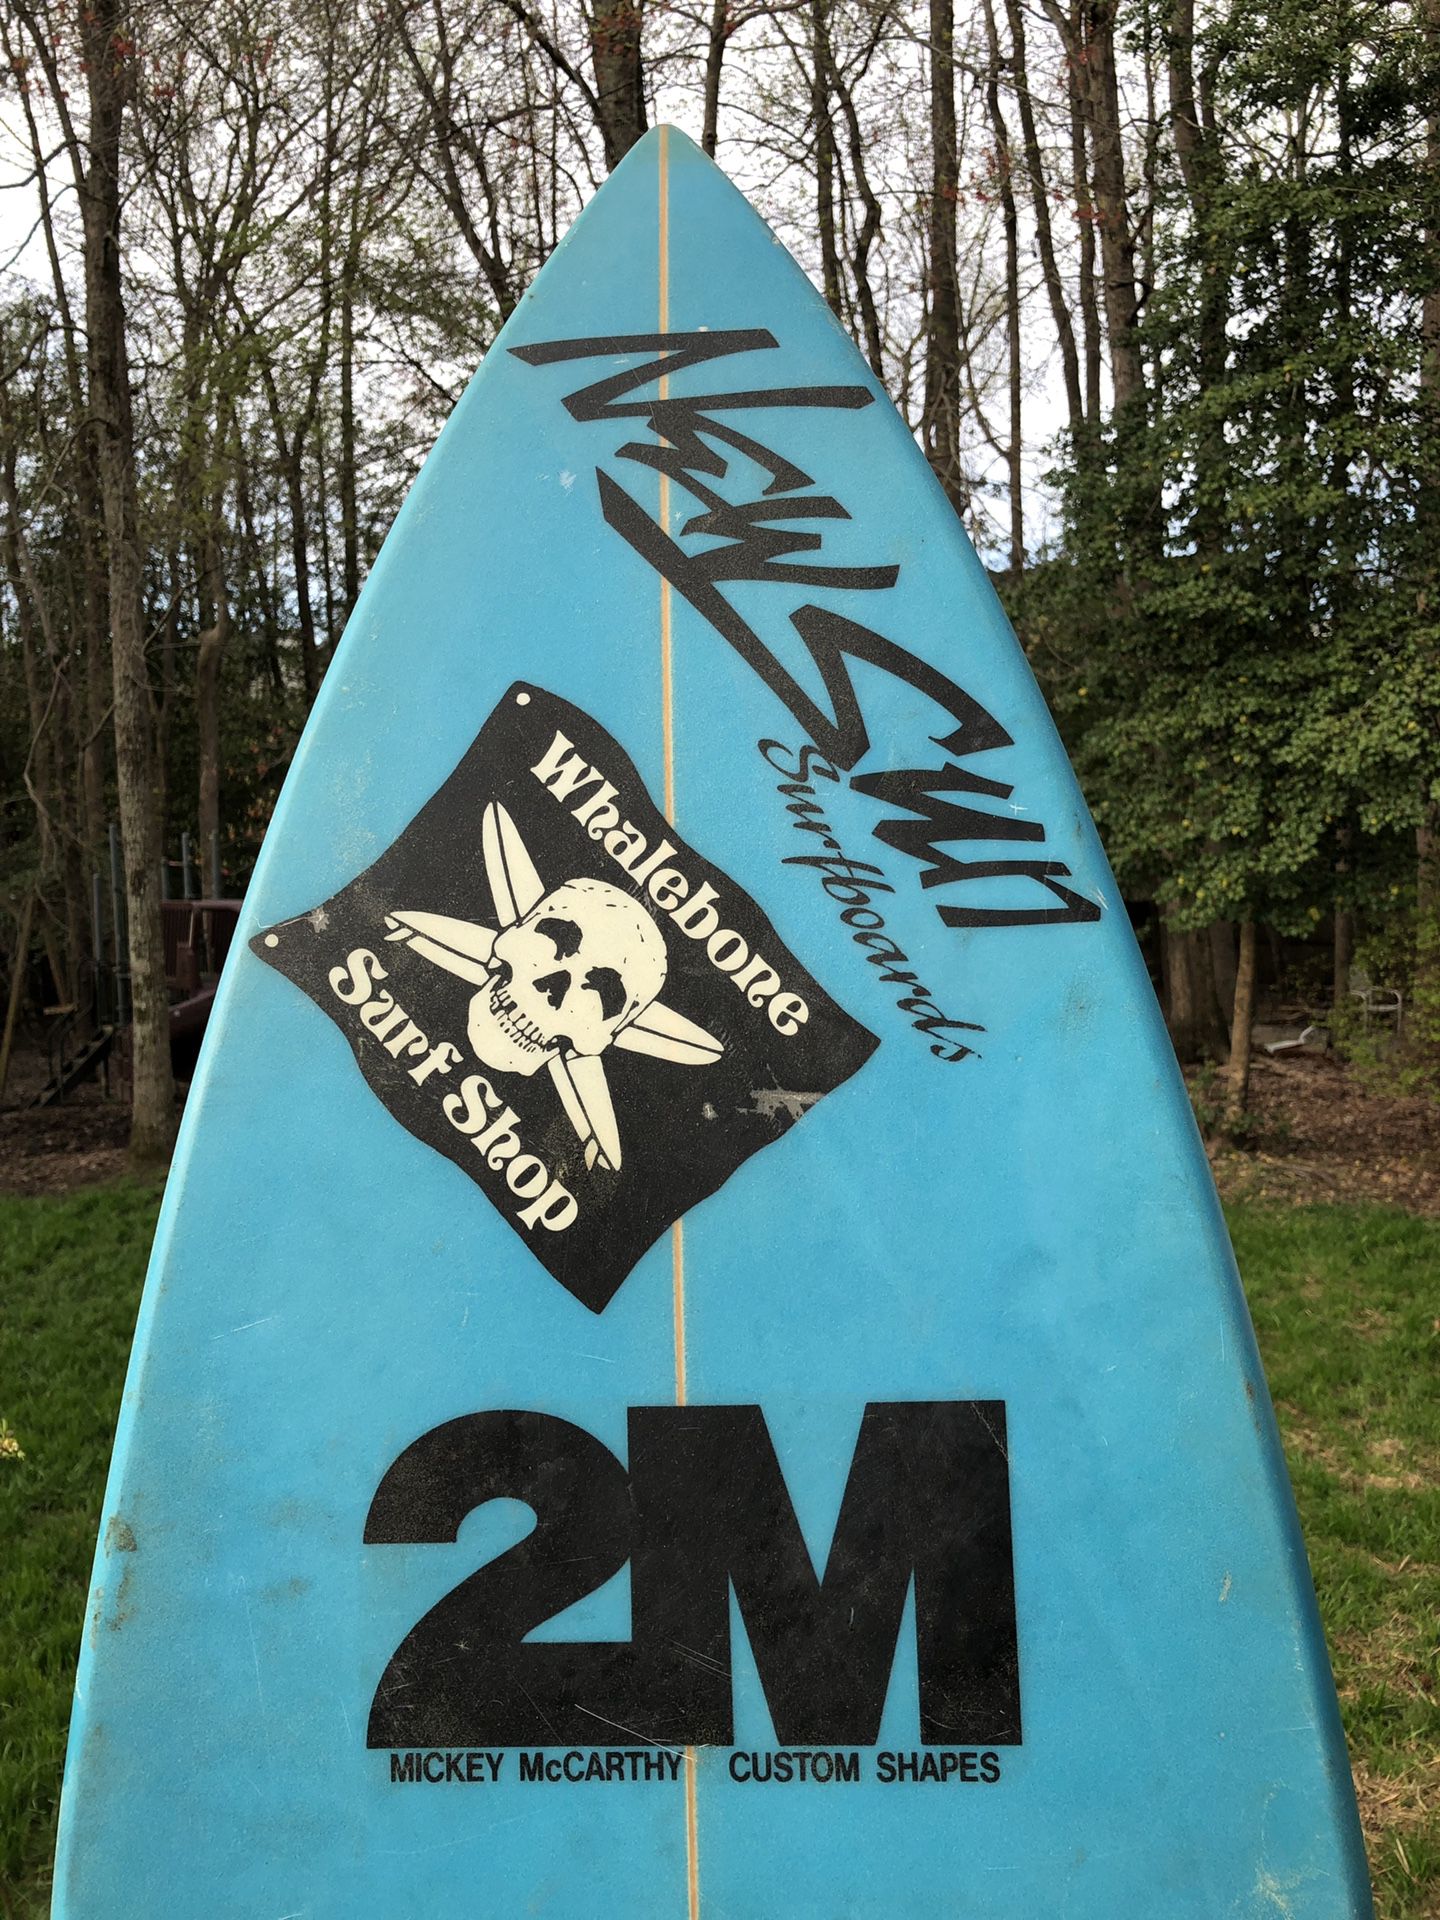 Surfboard Mickey McCarthy 2M classic